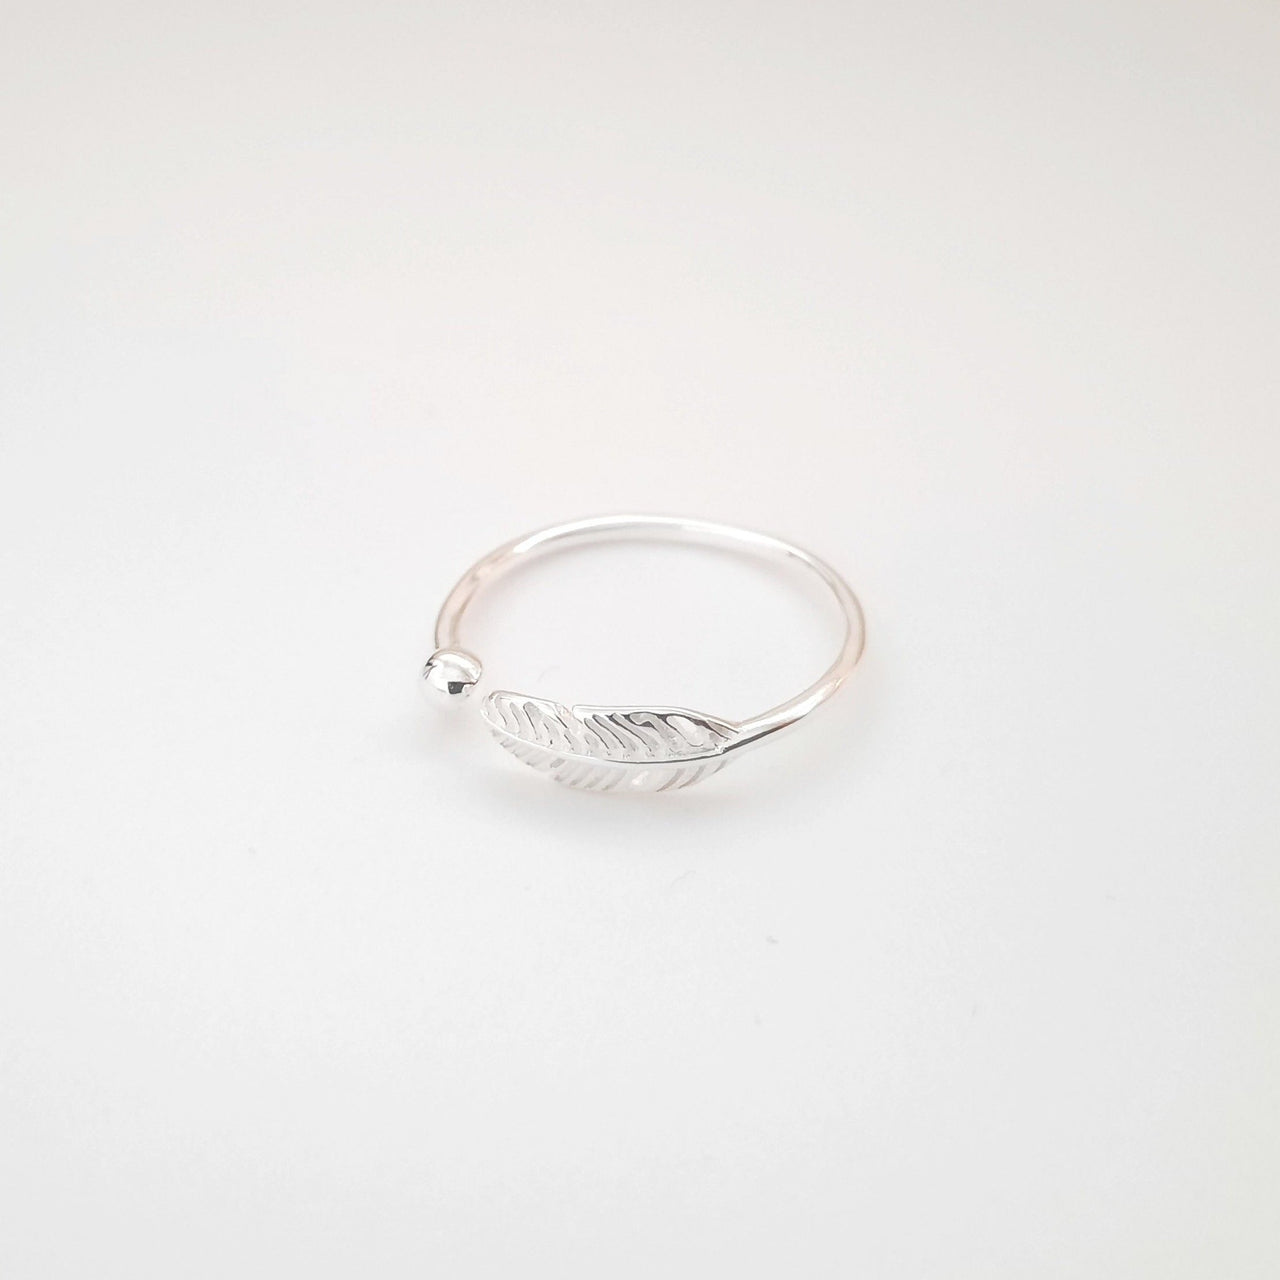 Halb Ring aus Silber mit Feder Ringe KOOMPLIMENTS